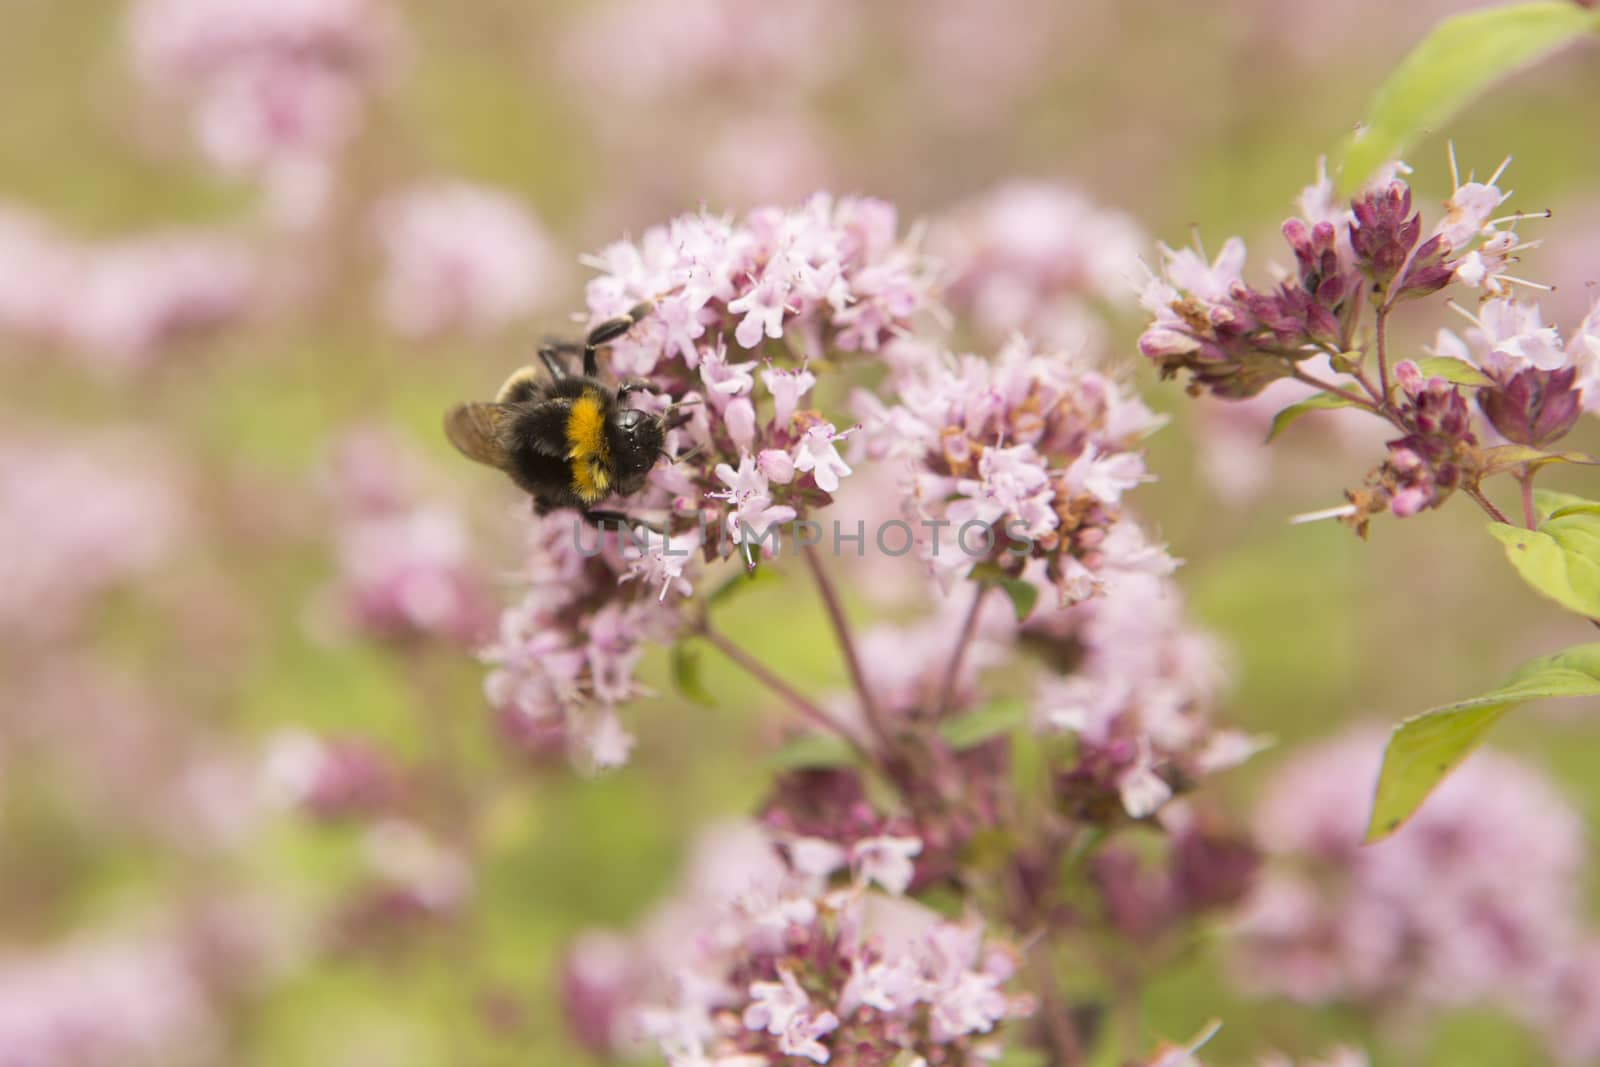 Bee on purple plant harvesting pollen by mattkusb